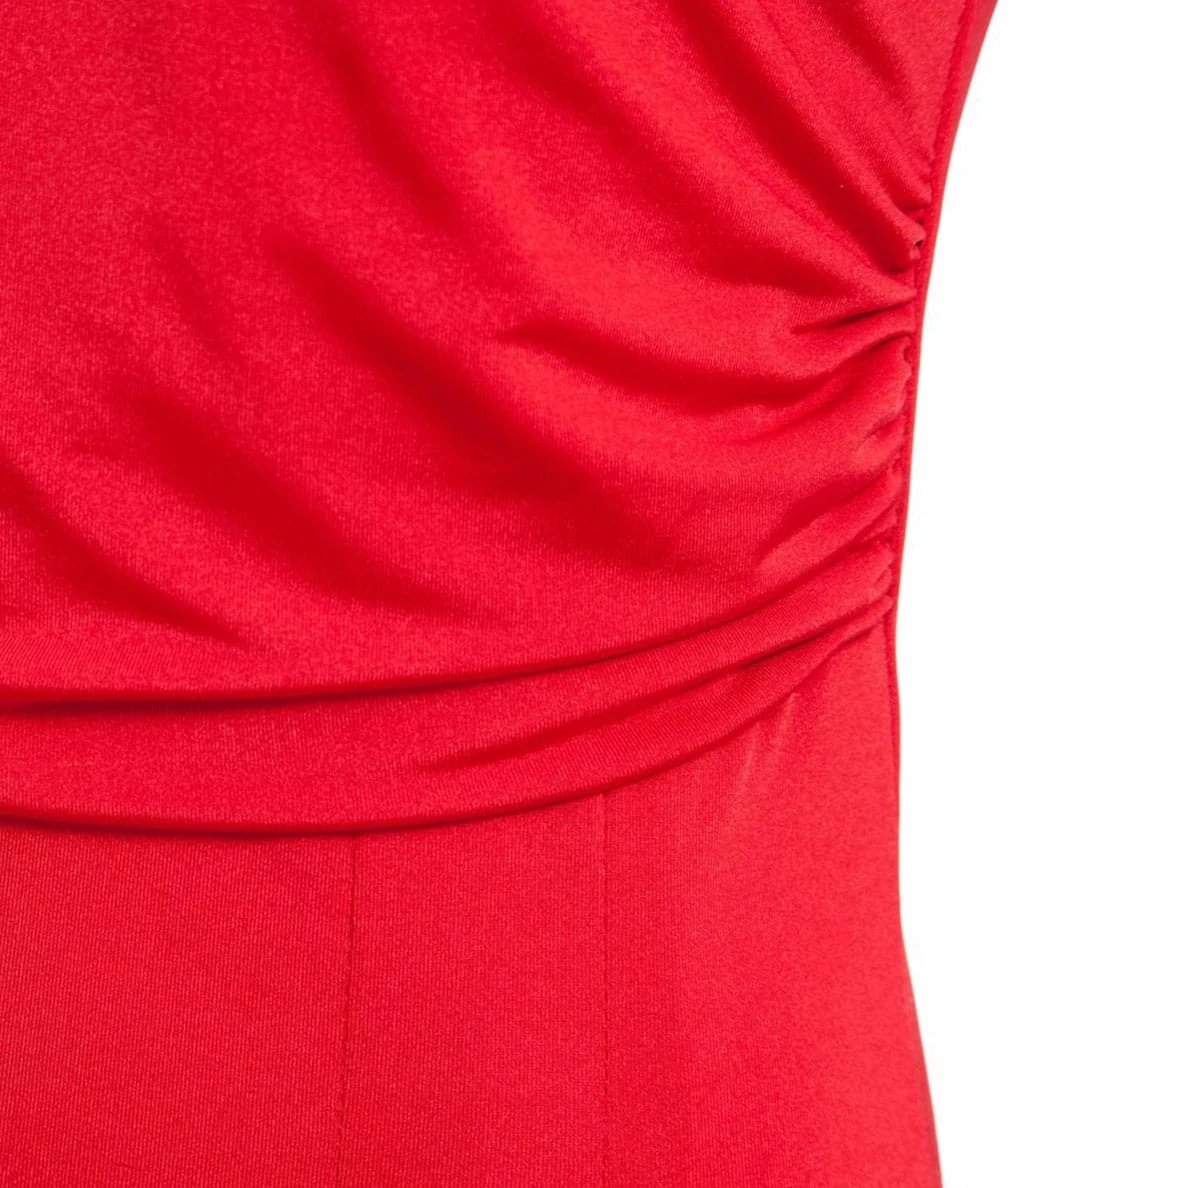 M0188 red7 Short Sleeve Dresses maureens.com boutique